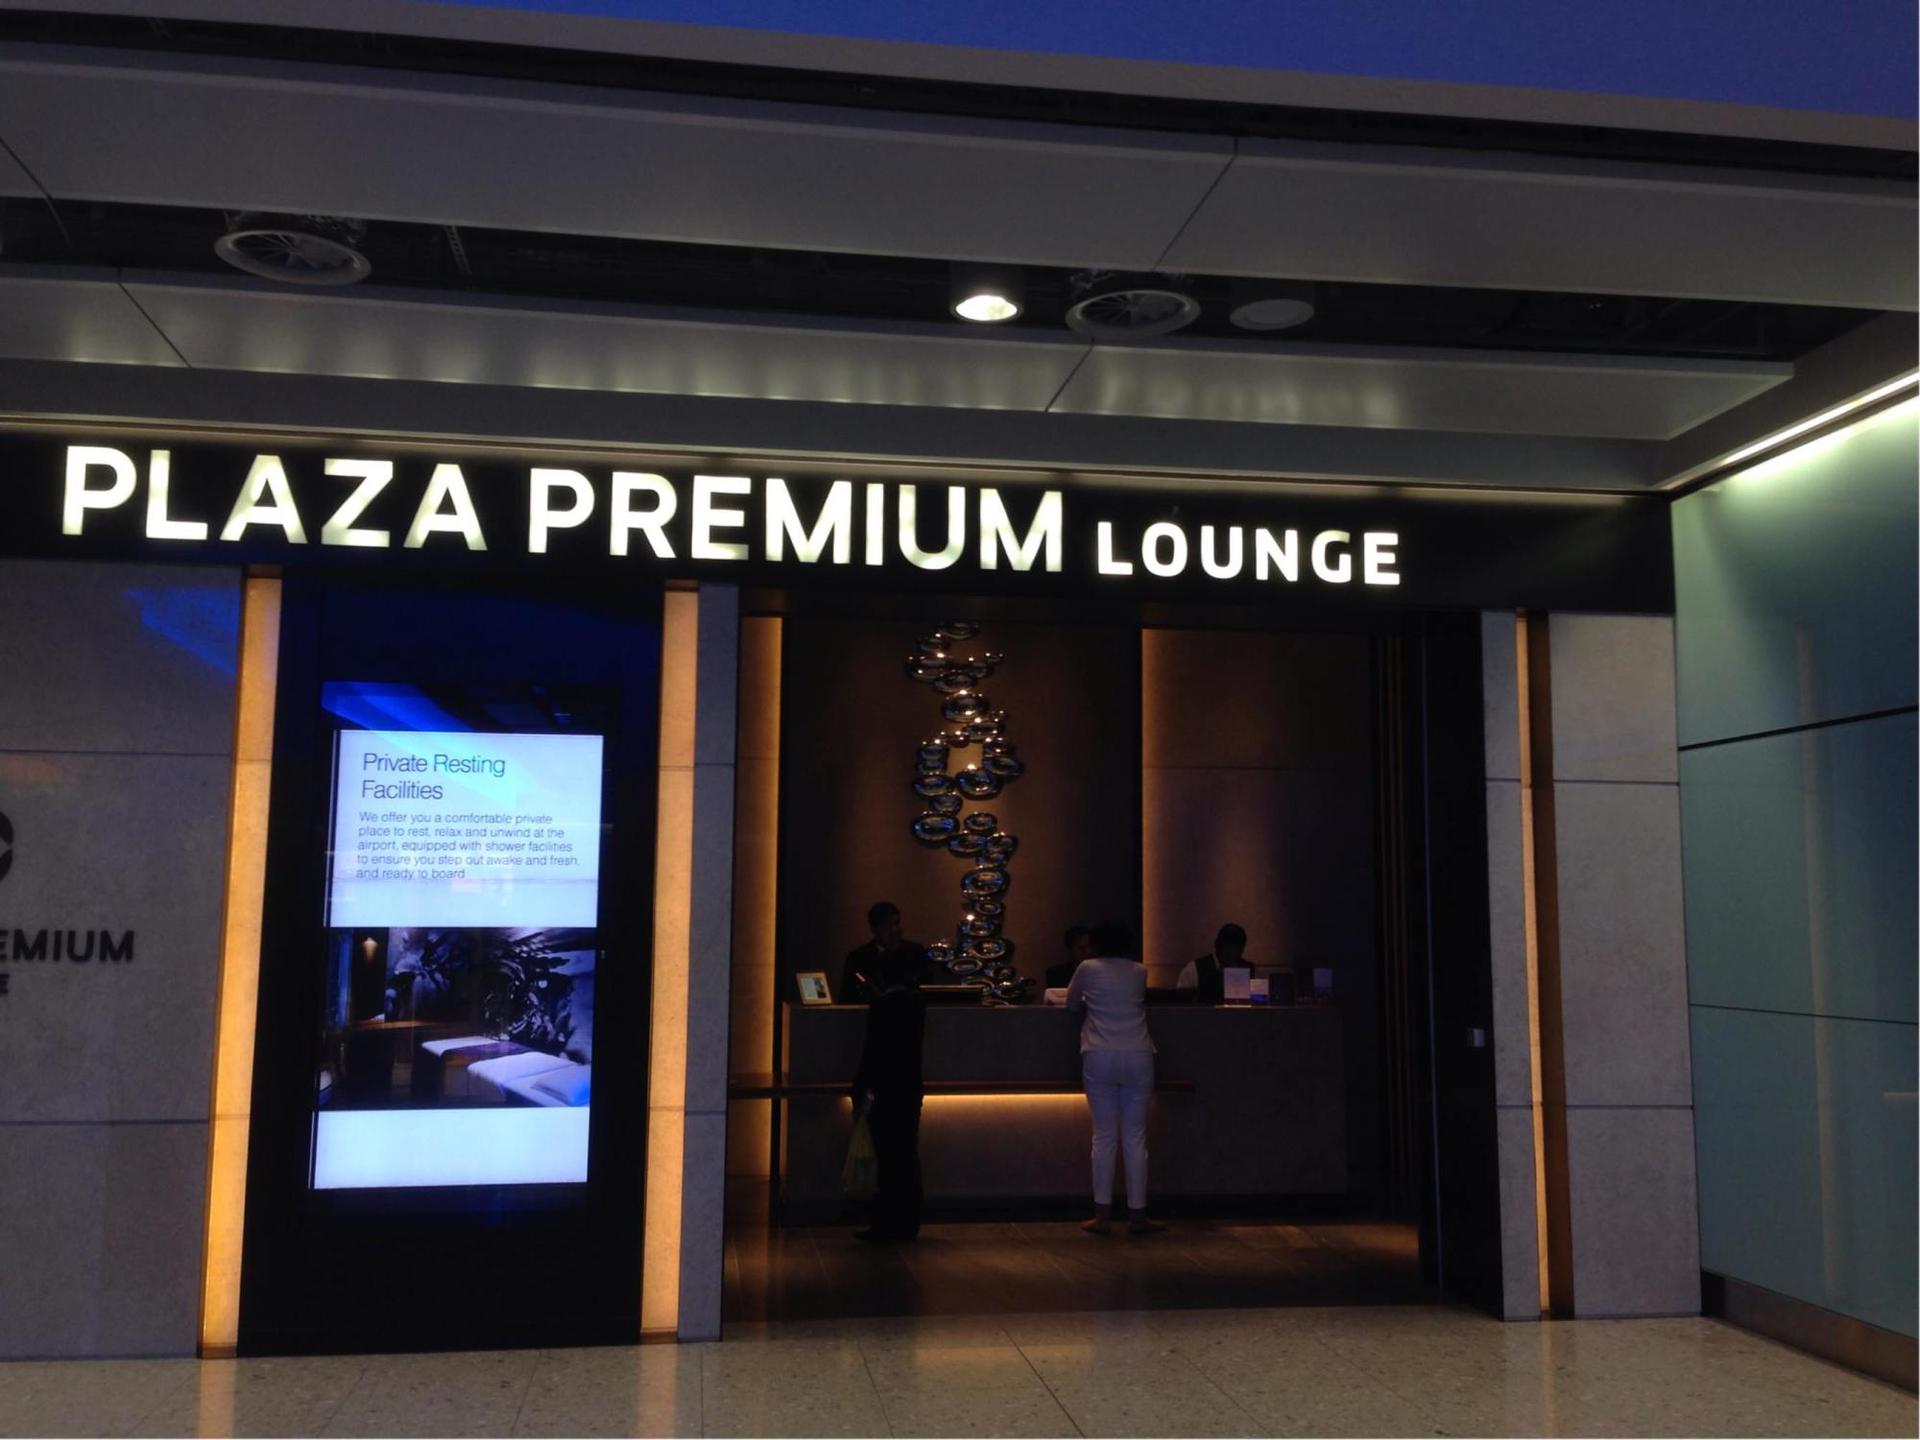 Plaza Premium Lounge image 19 of 68